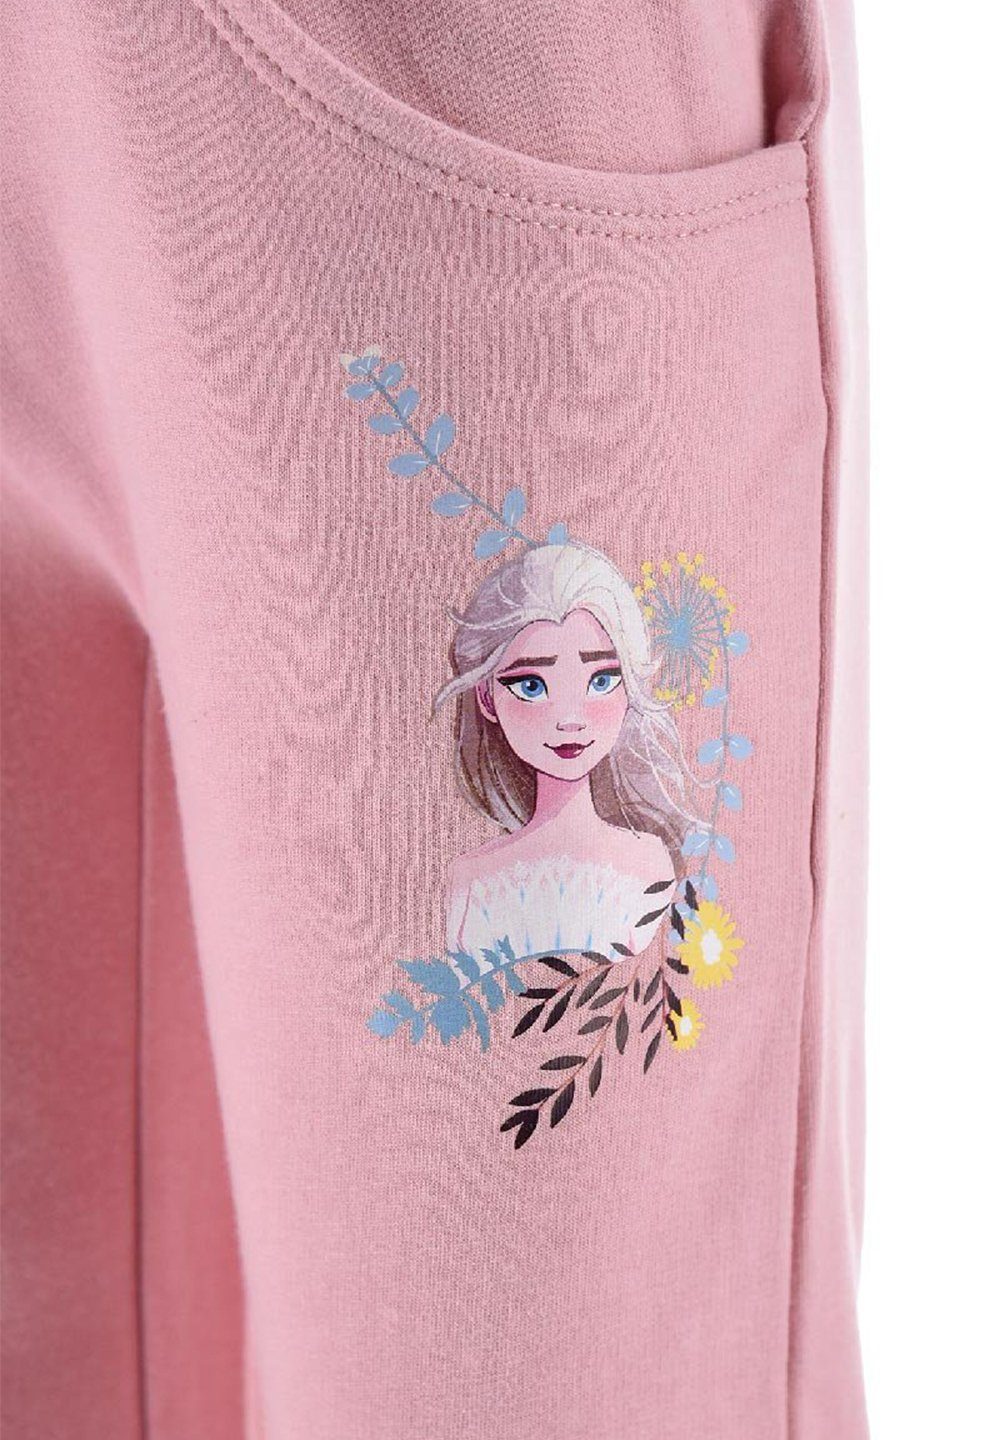 Elsa Frozen City Mädchen Kinder Sun Jogginghose Trainingshose Eiskönigin Pink Freizeithose Disney